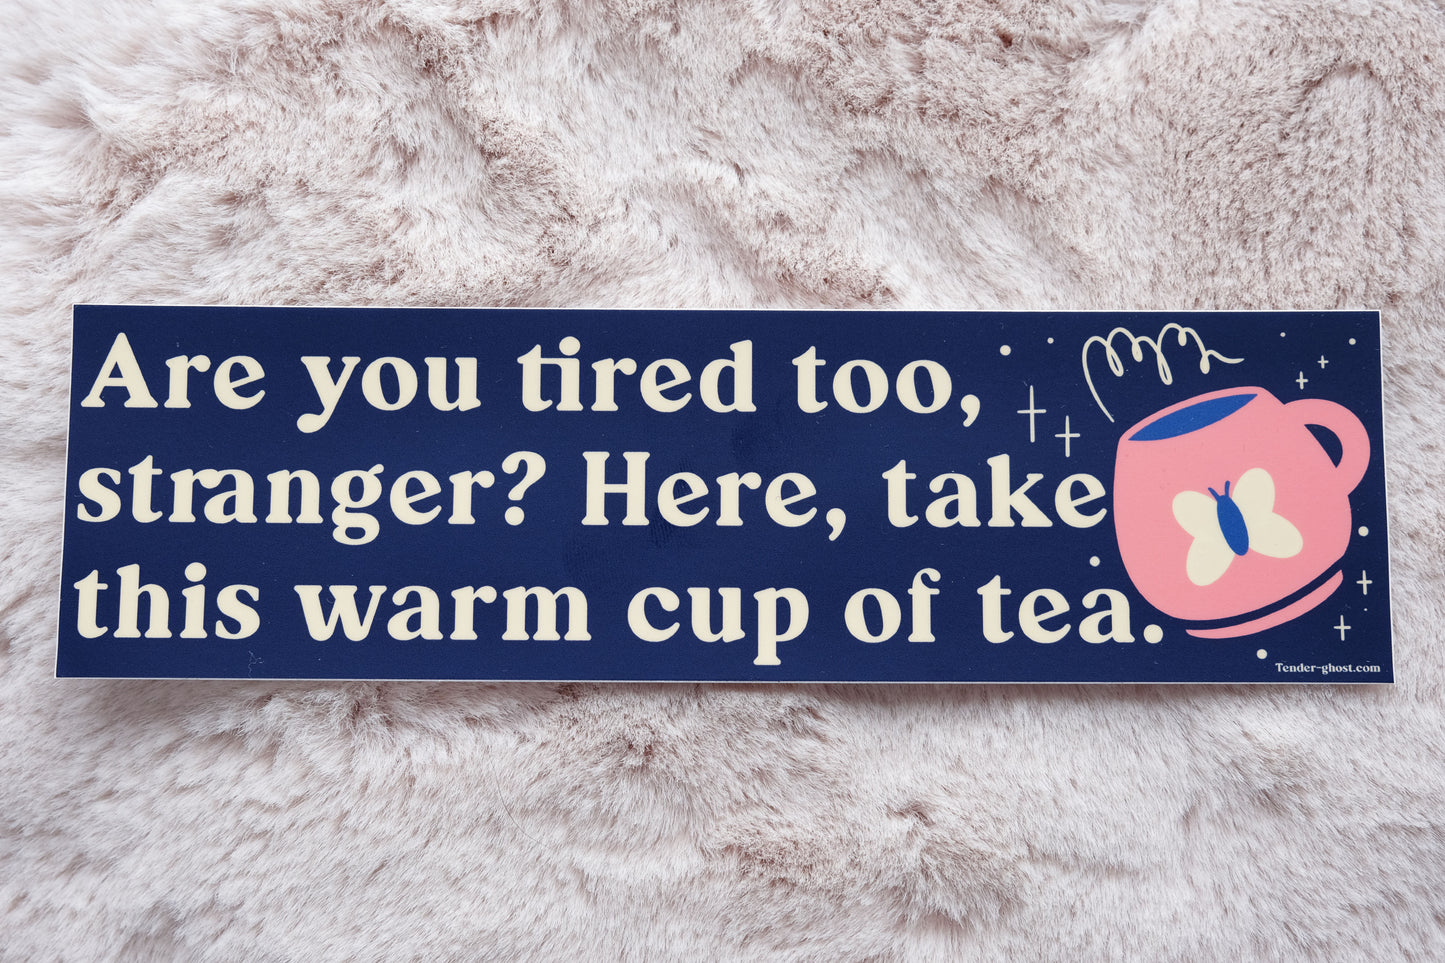 Warm Tea Bumper Sticker